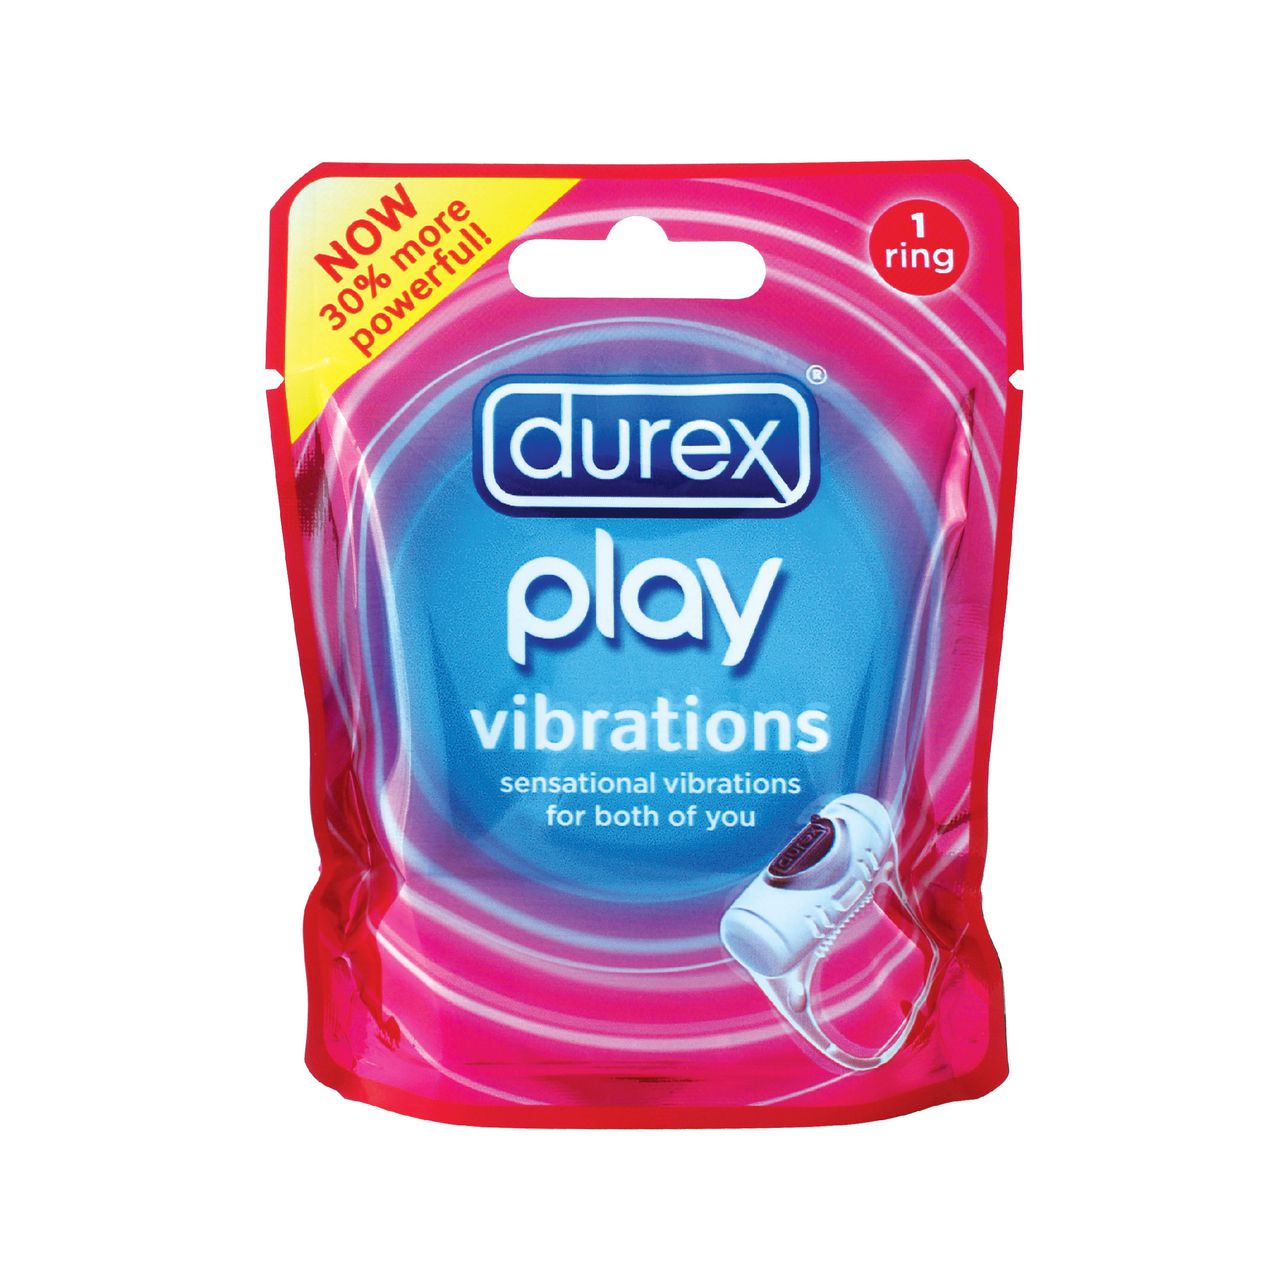 Durex Play Vibrations Sexual Pleasure Durex Singapore